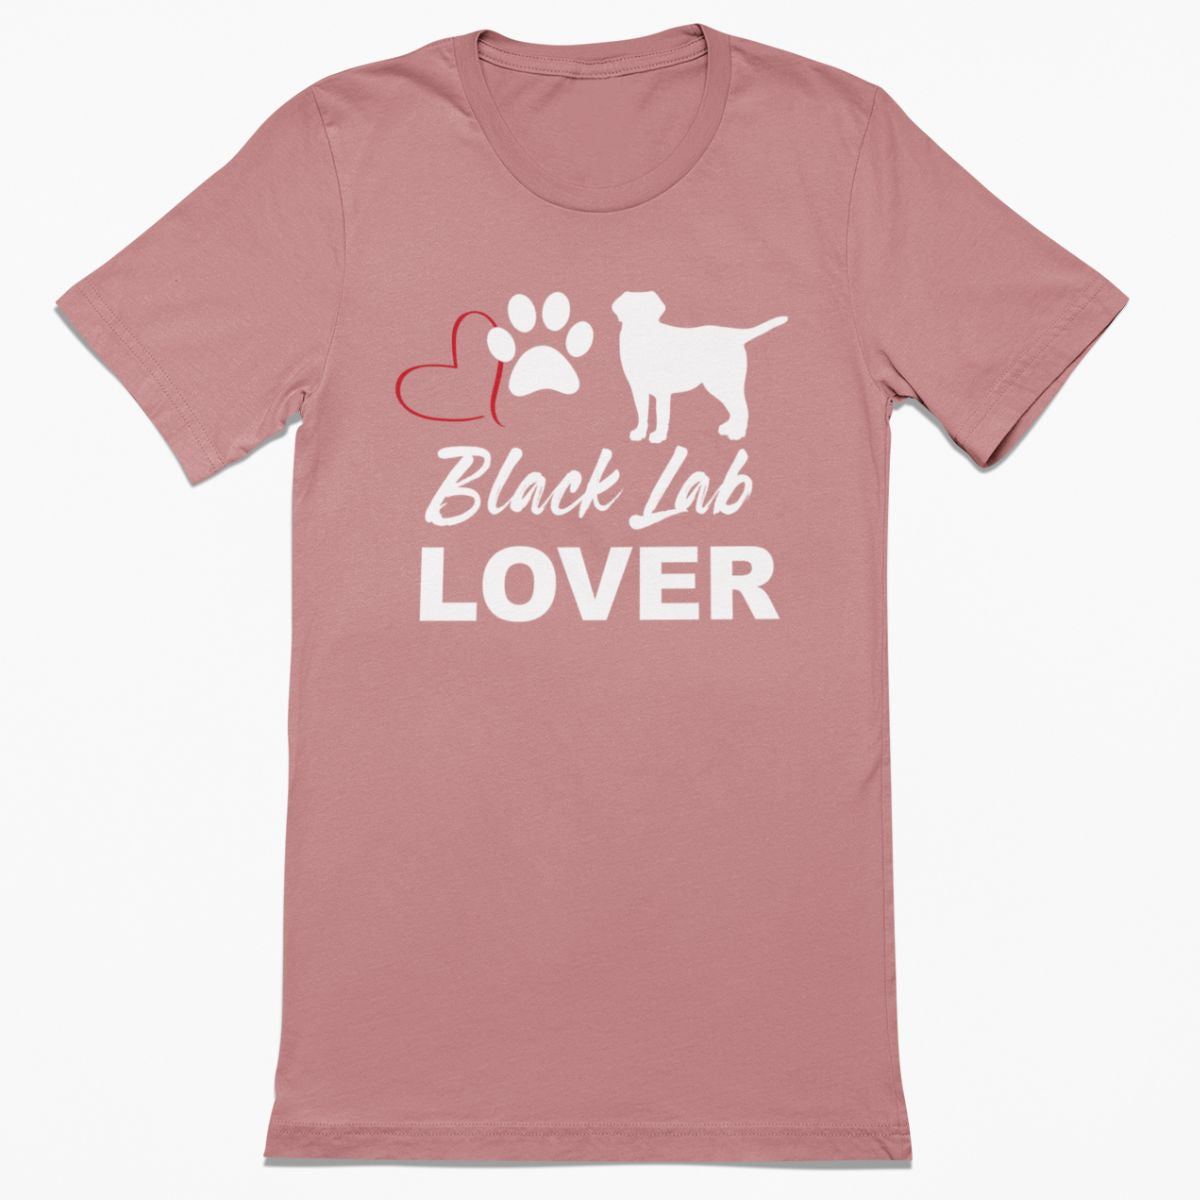 Black Lab Lover Shirt